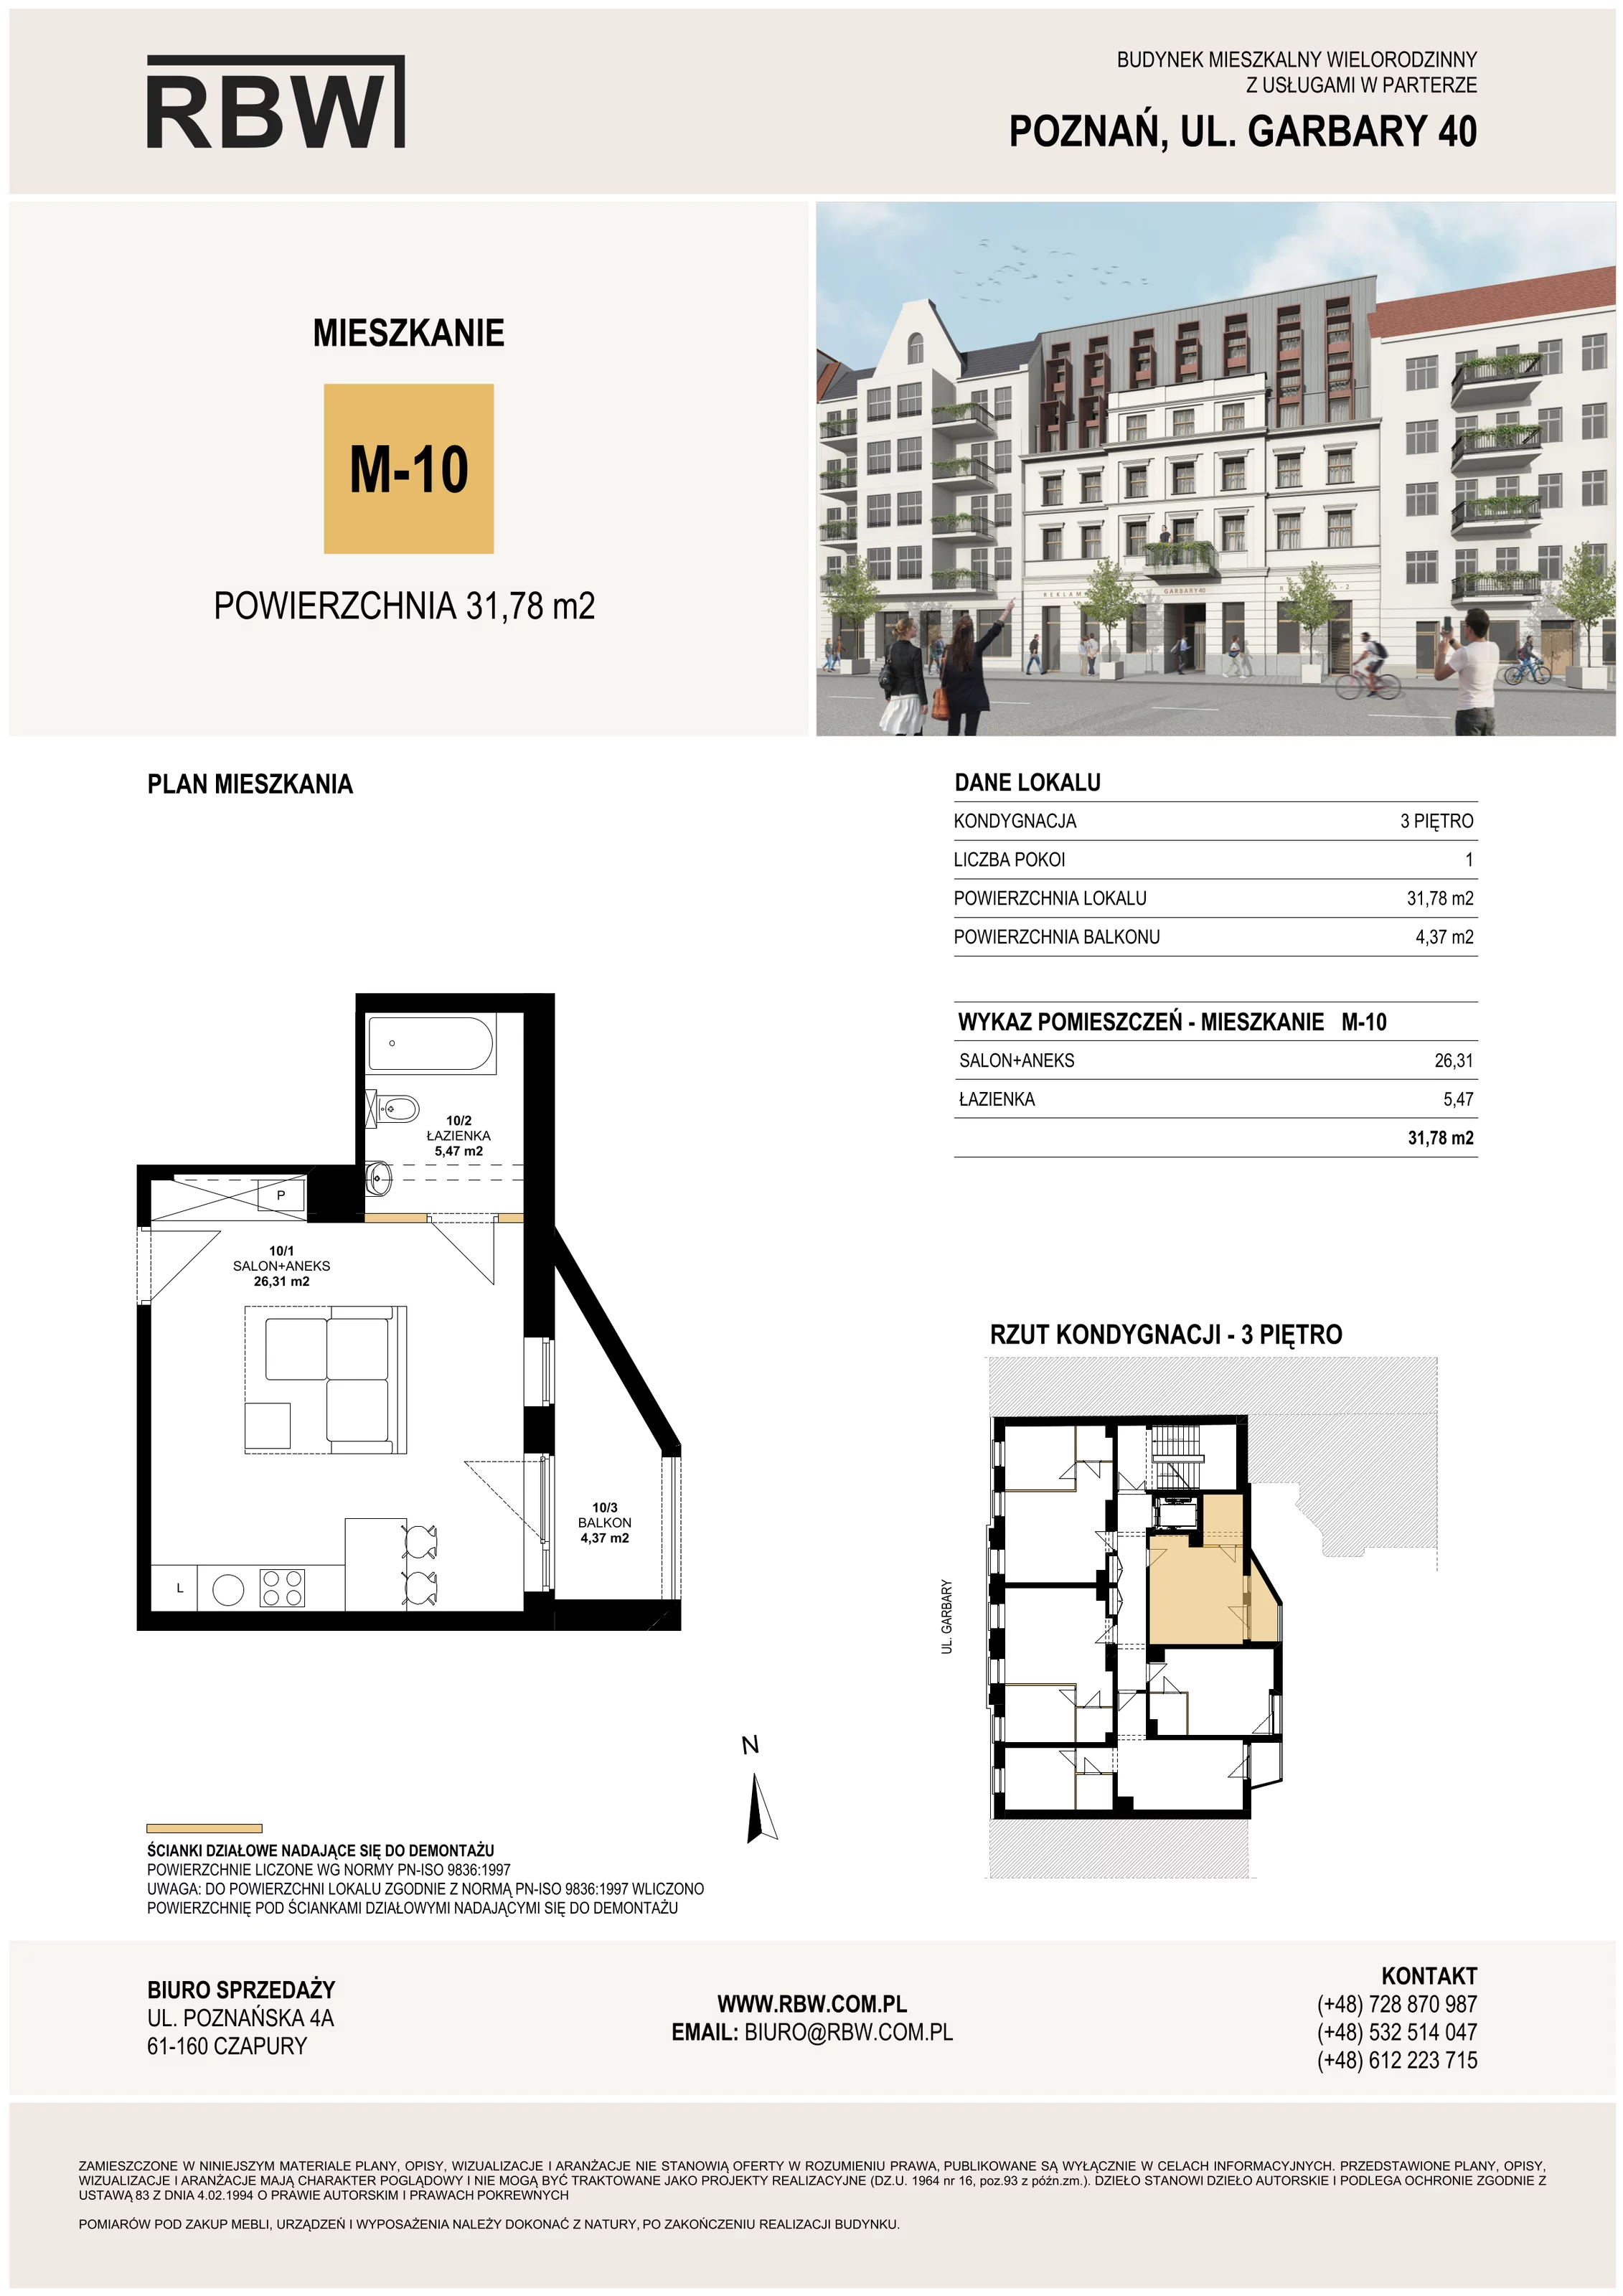 Mieszkanie 31,78 m², piętro 3, oferta nr M10, Garbary 40, Poznań, Stare Miasto, Stare Miasto, ul. Garbary 40